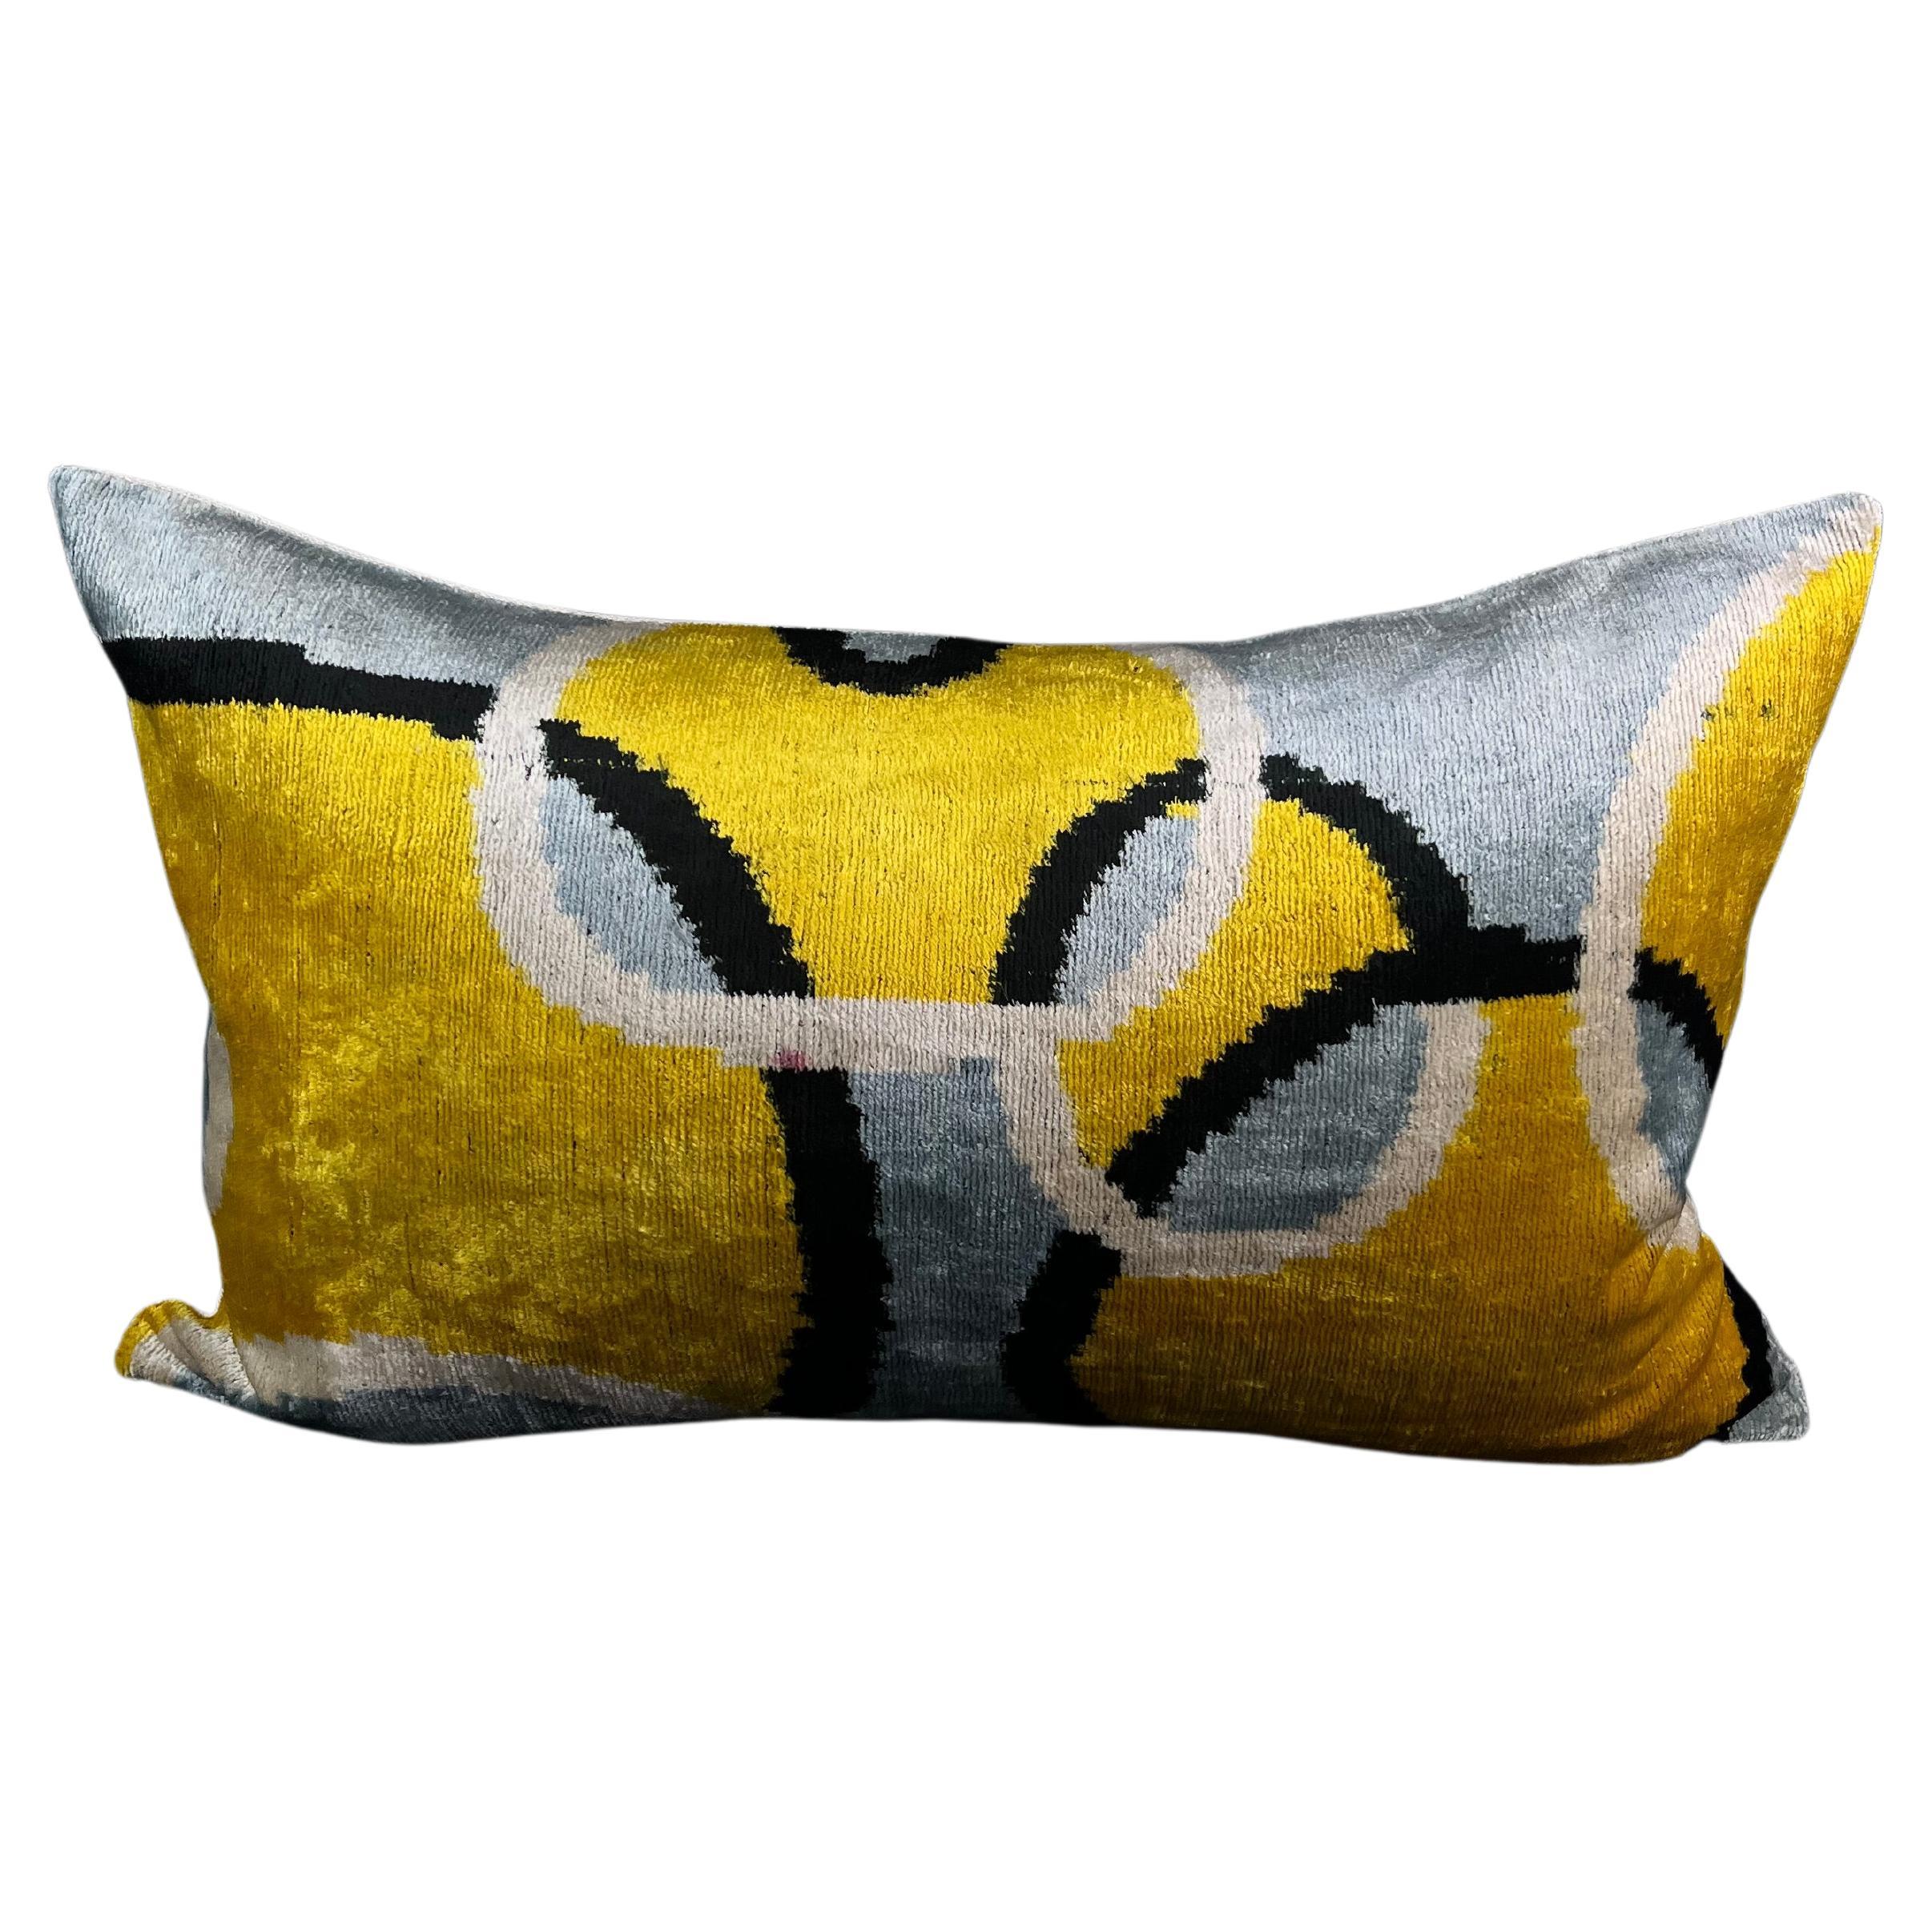 Gray and Yellow Geometric Circle Design Velvet Silk Ikat Pillow Cover